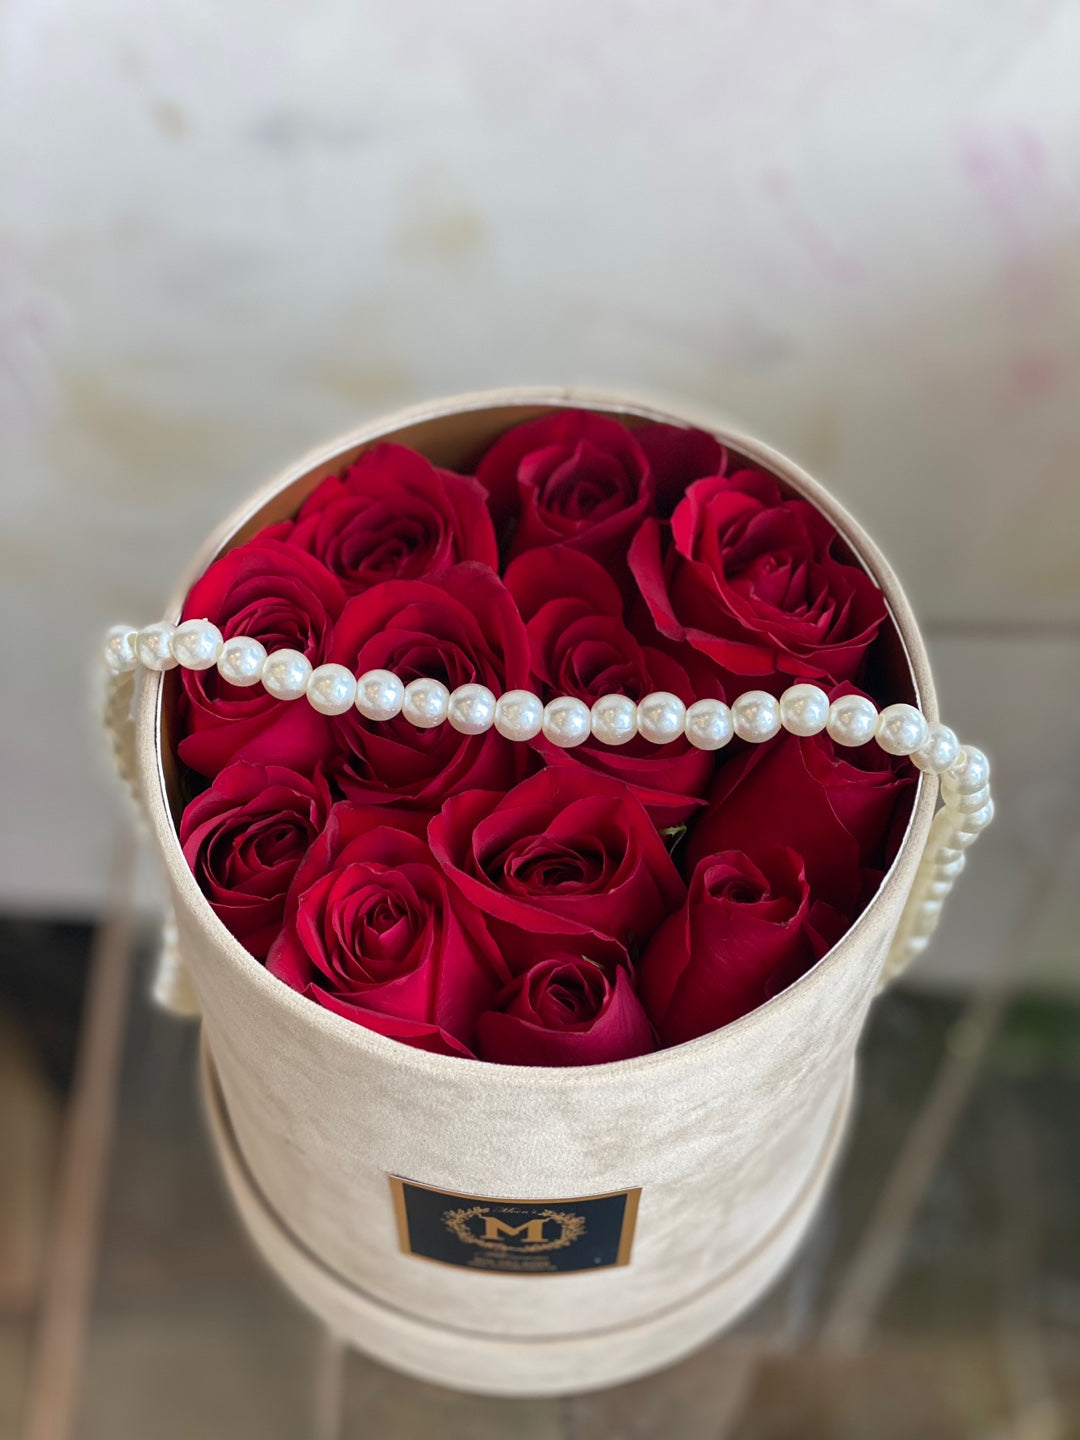 Rose Box